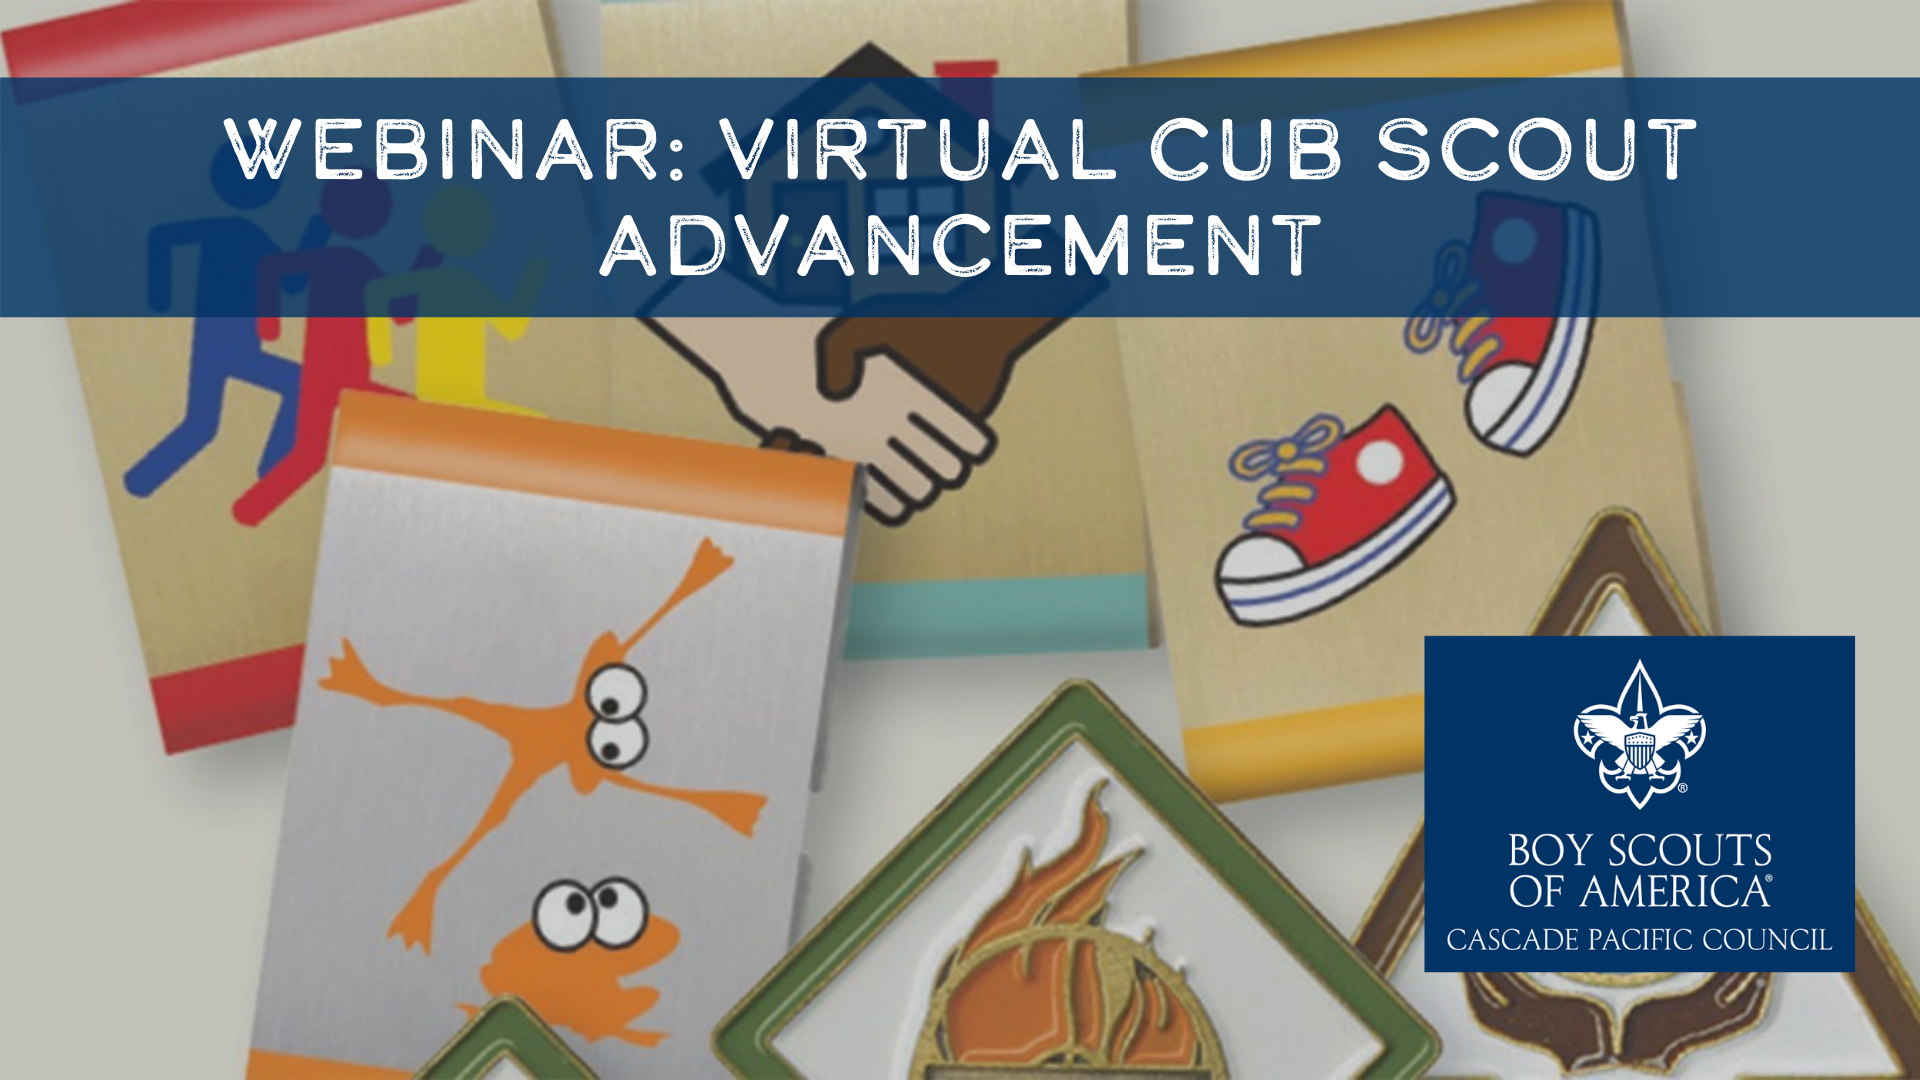 Webinar: Virtual Cub Scout Advancement